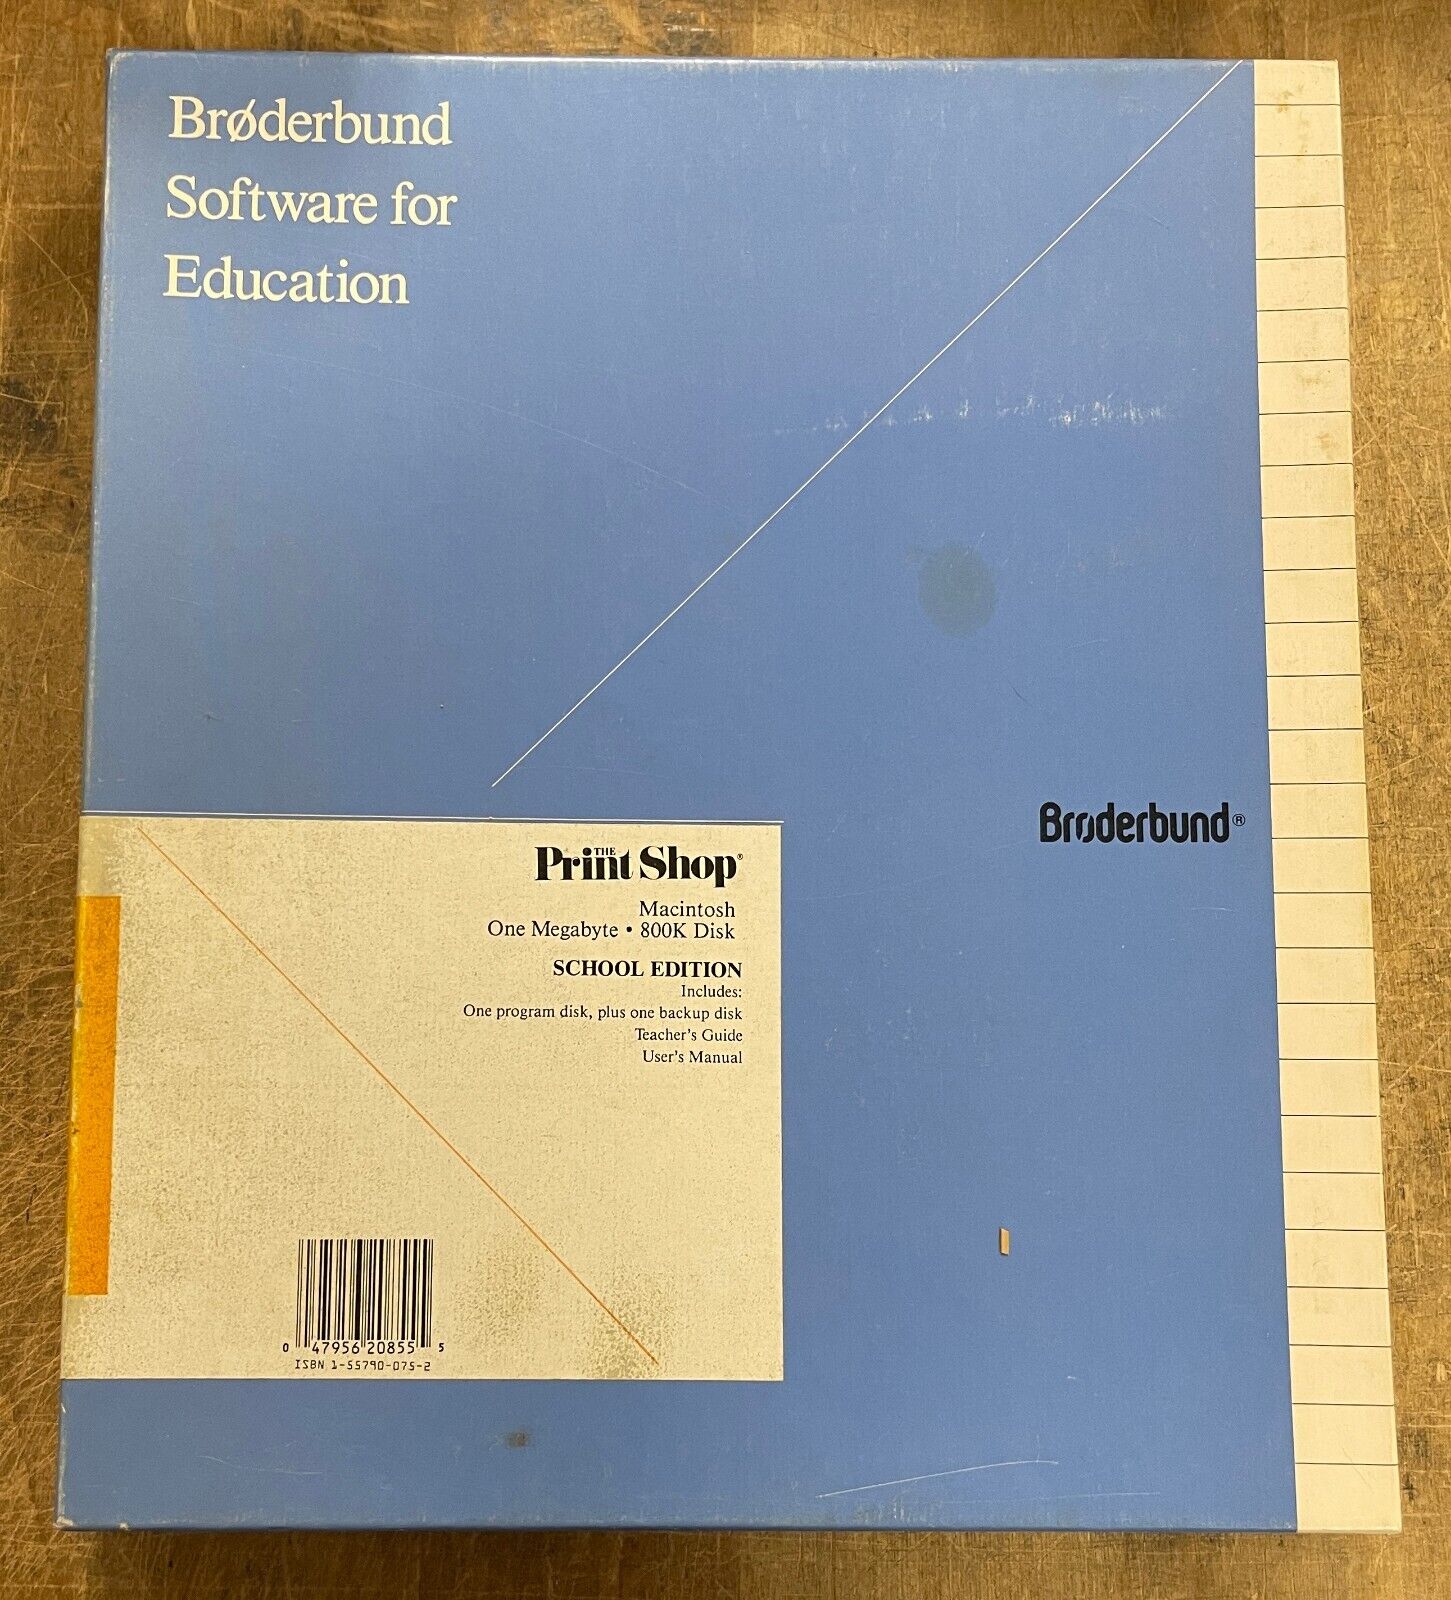 Broderbund The Print Shop Macintosh One Megabyte-800K Disk SCHOOL EDUCATION